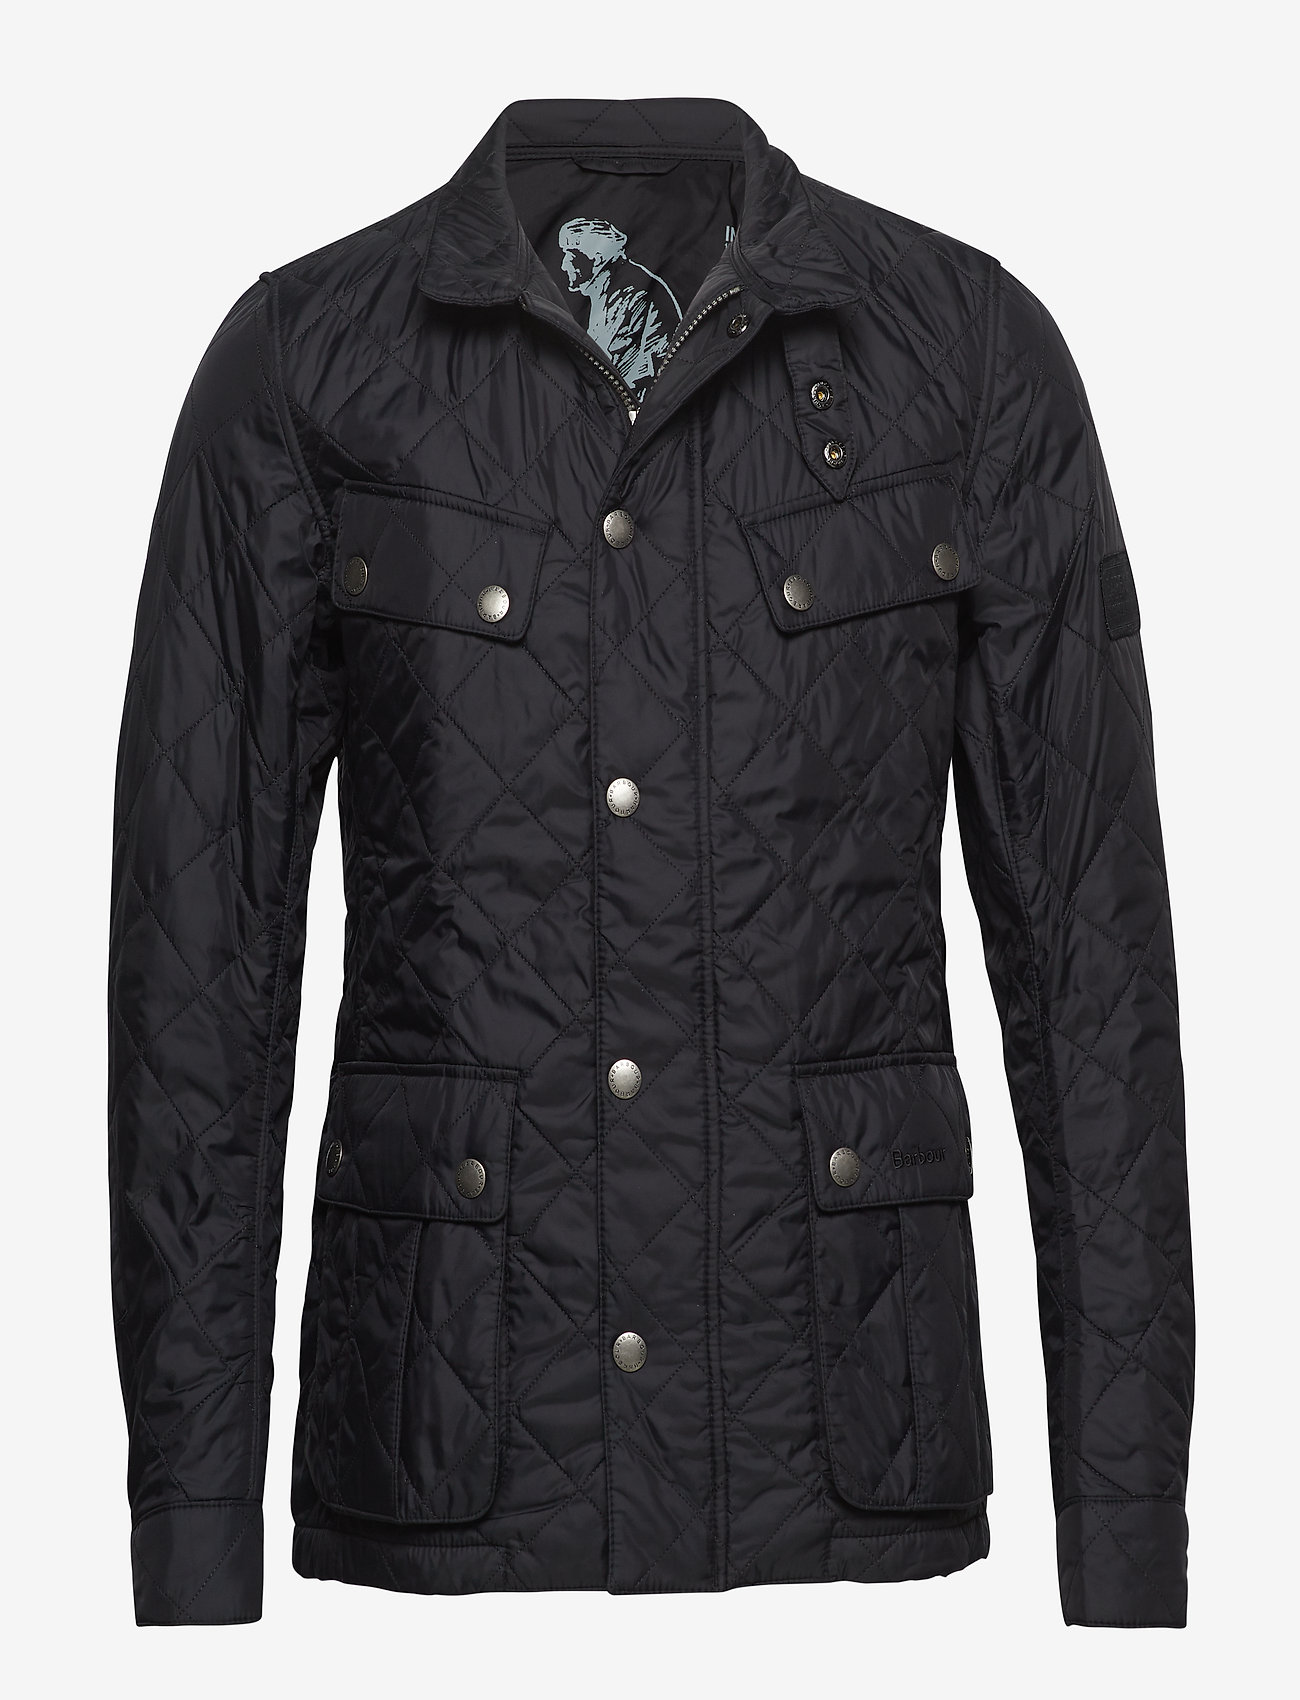 Barbour - Ariel Quilt - quilted jackets - black - 0